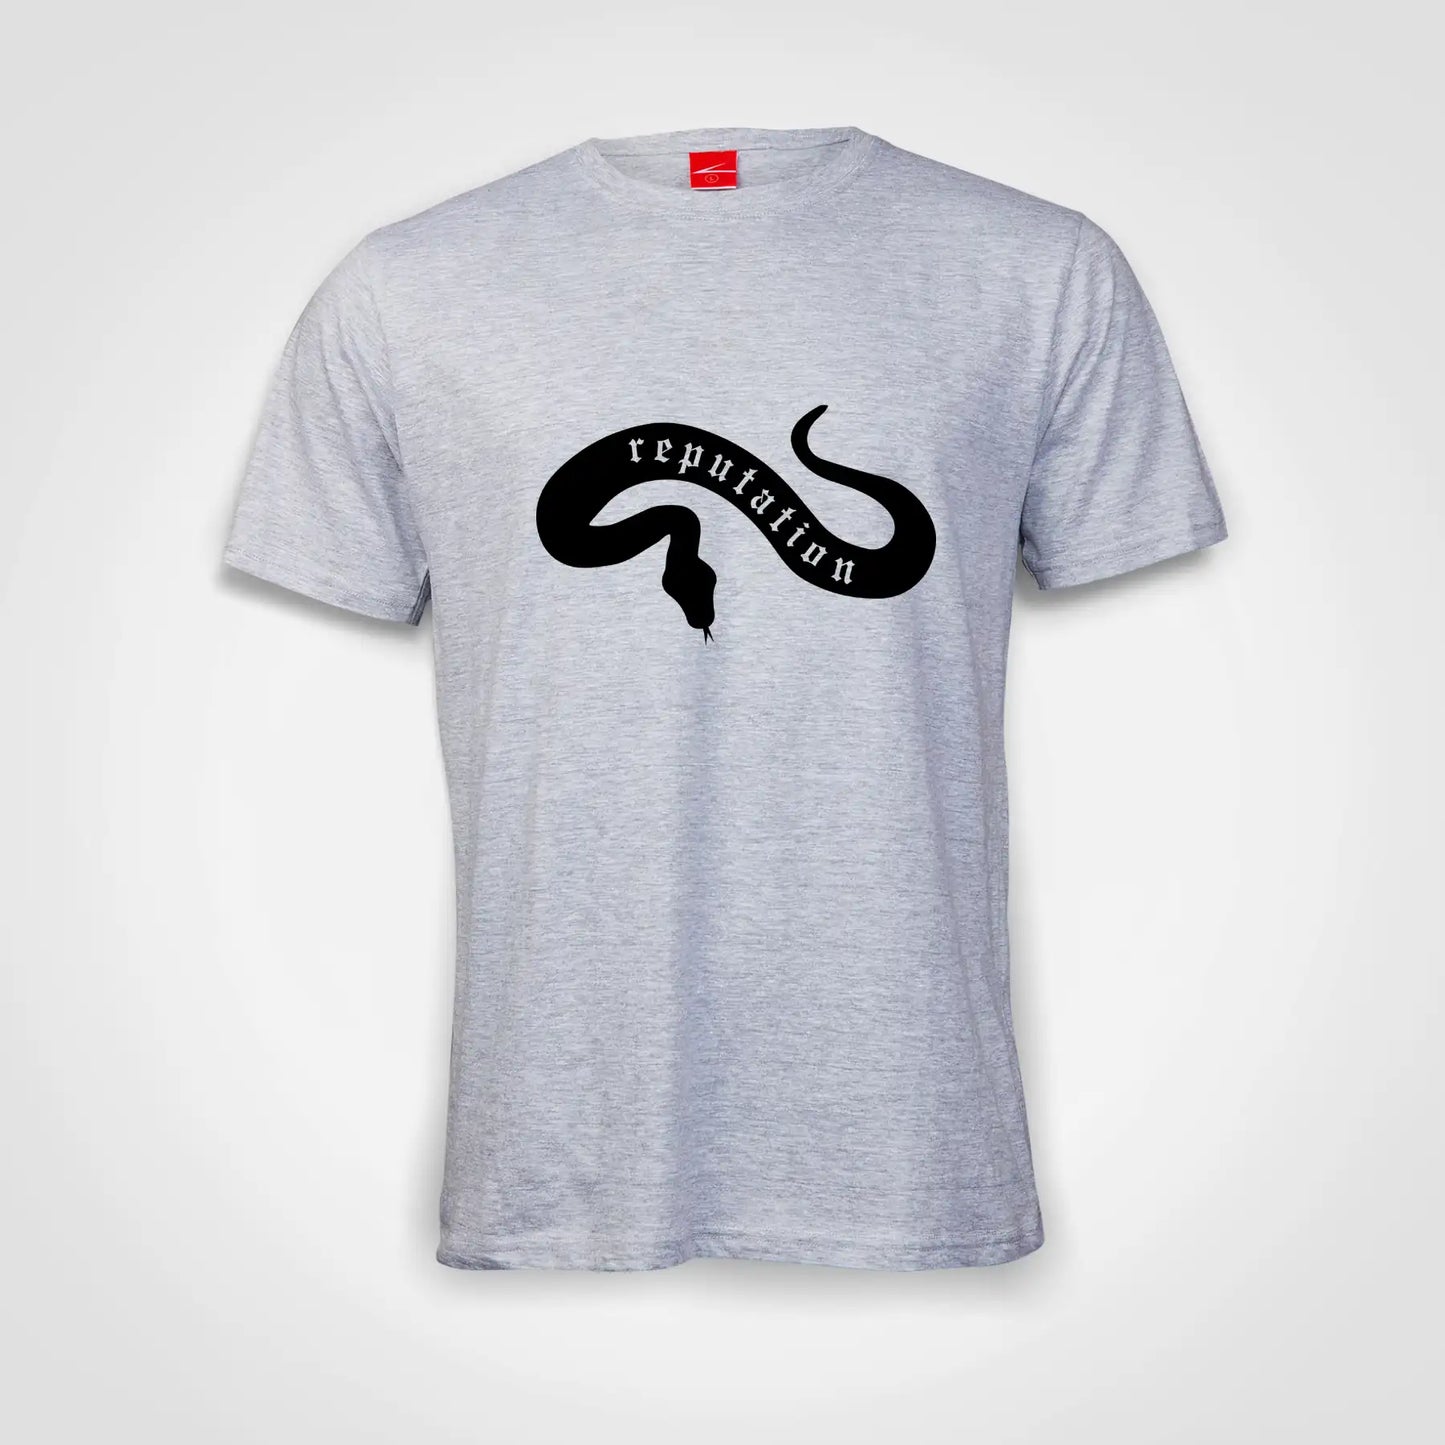 Reputation Snake Cotton T-Shirt Grey-Melange IZZIT APPAREL